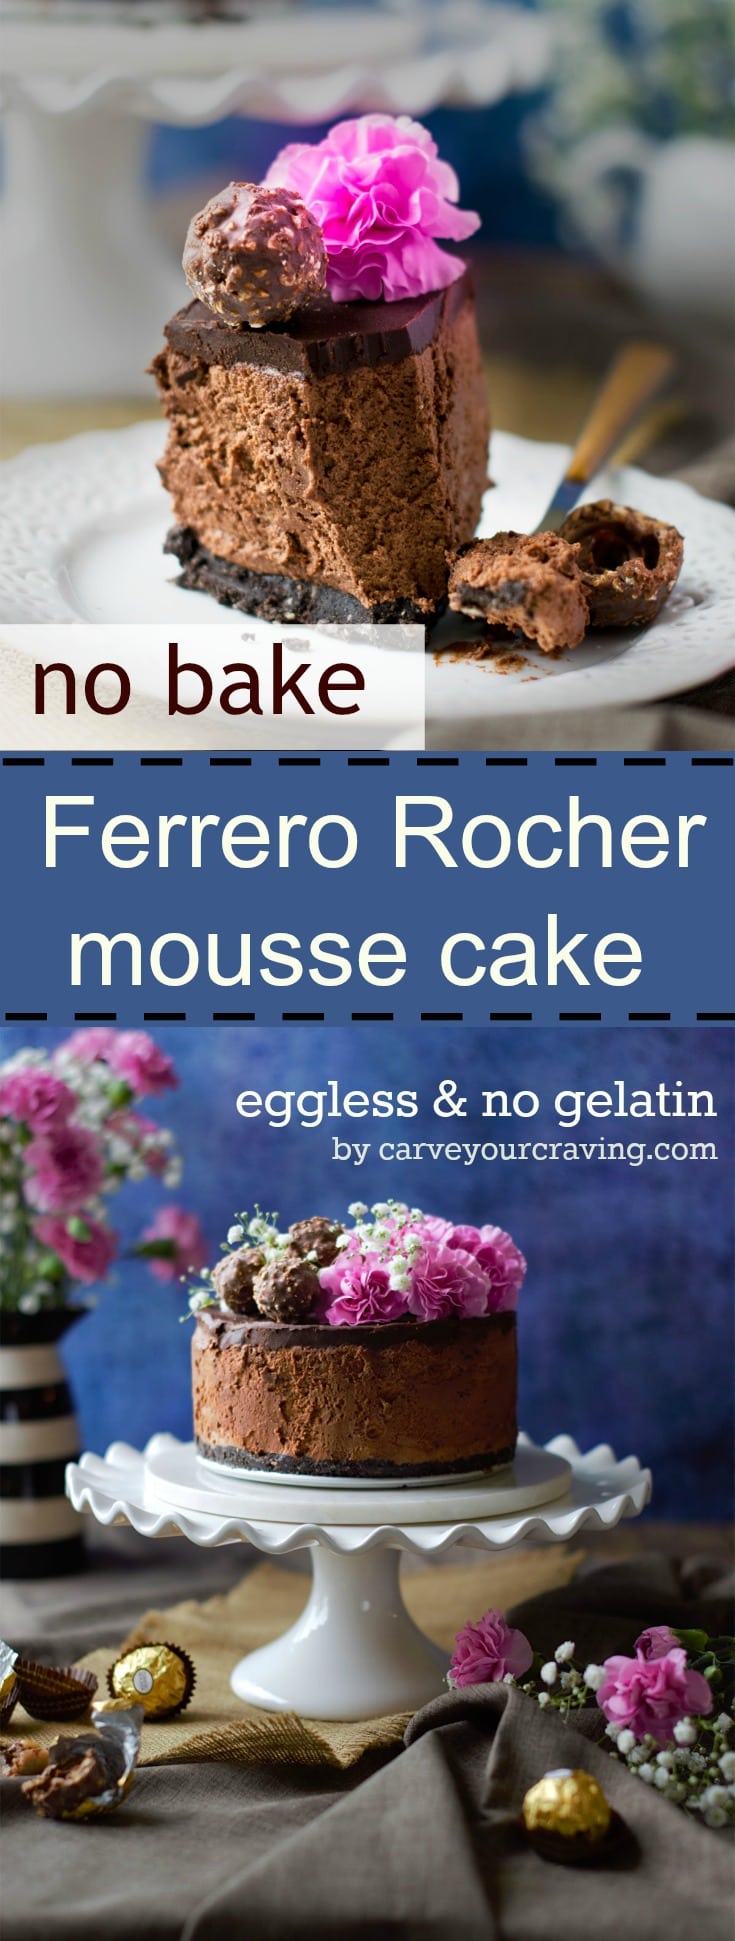 No bake eggless ferrero rocher mousse cake